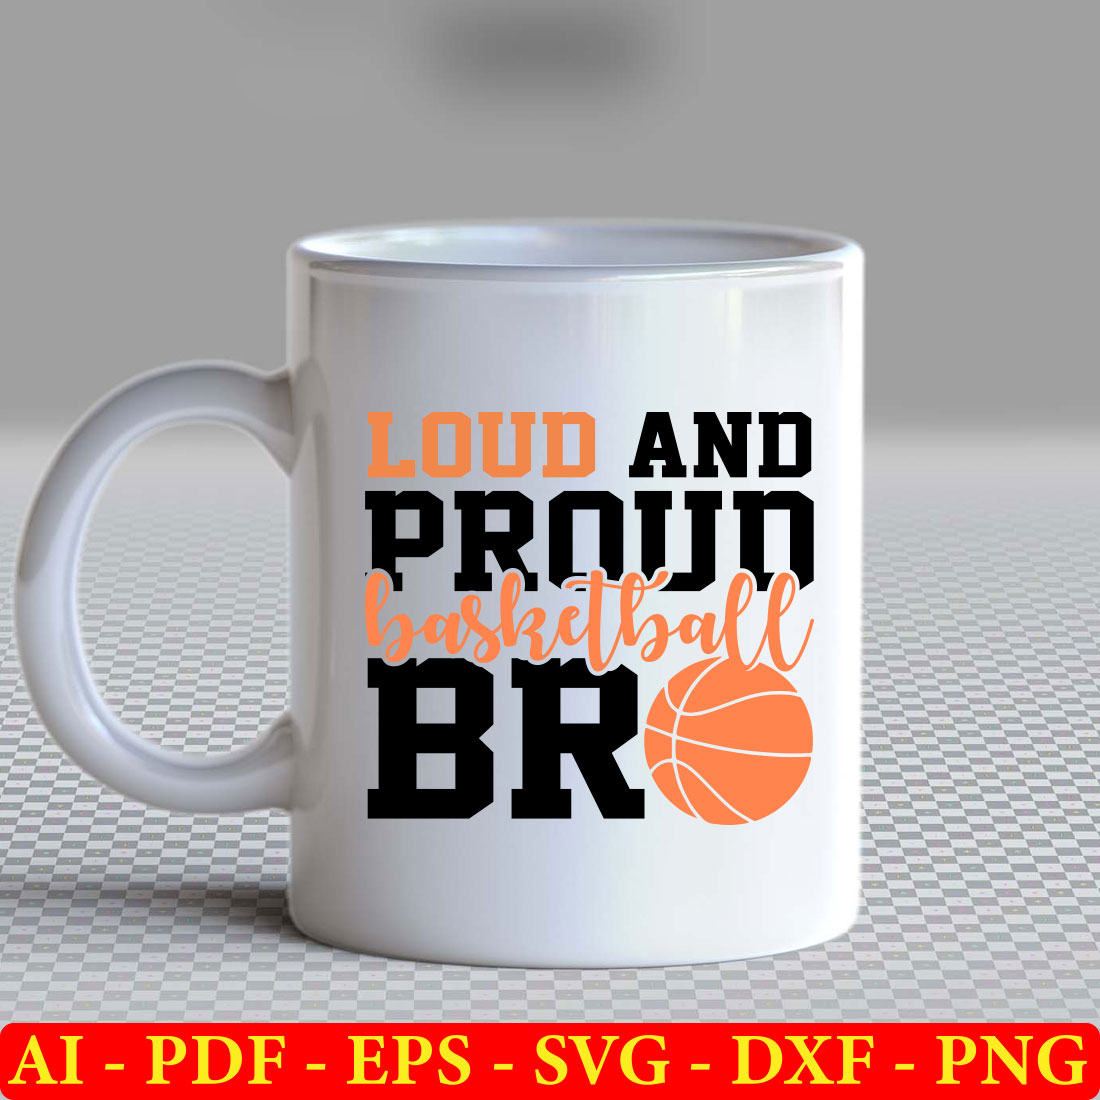 White coffee mug with an orange basketball on it.